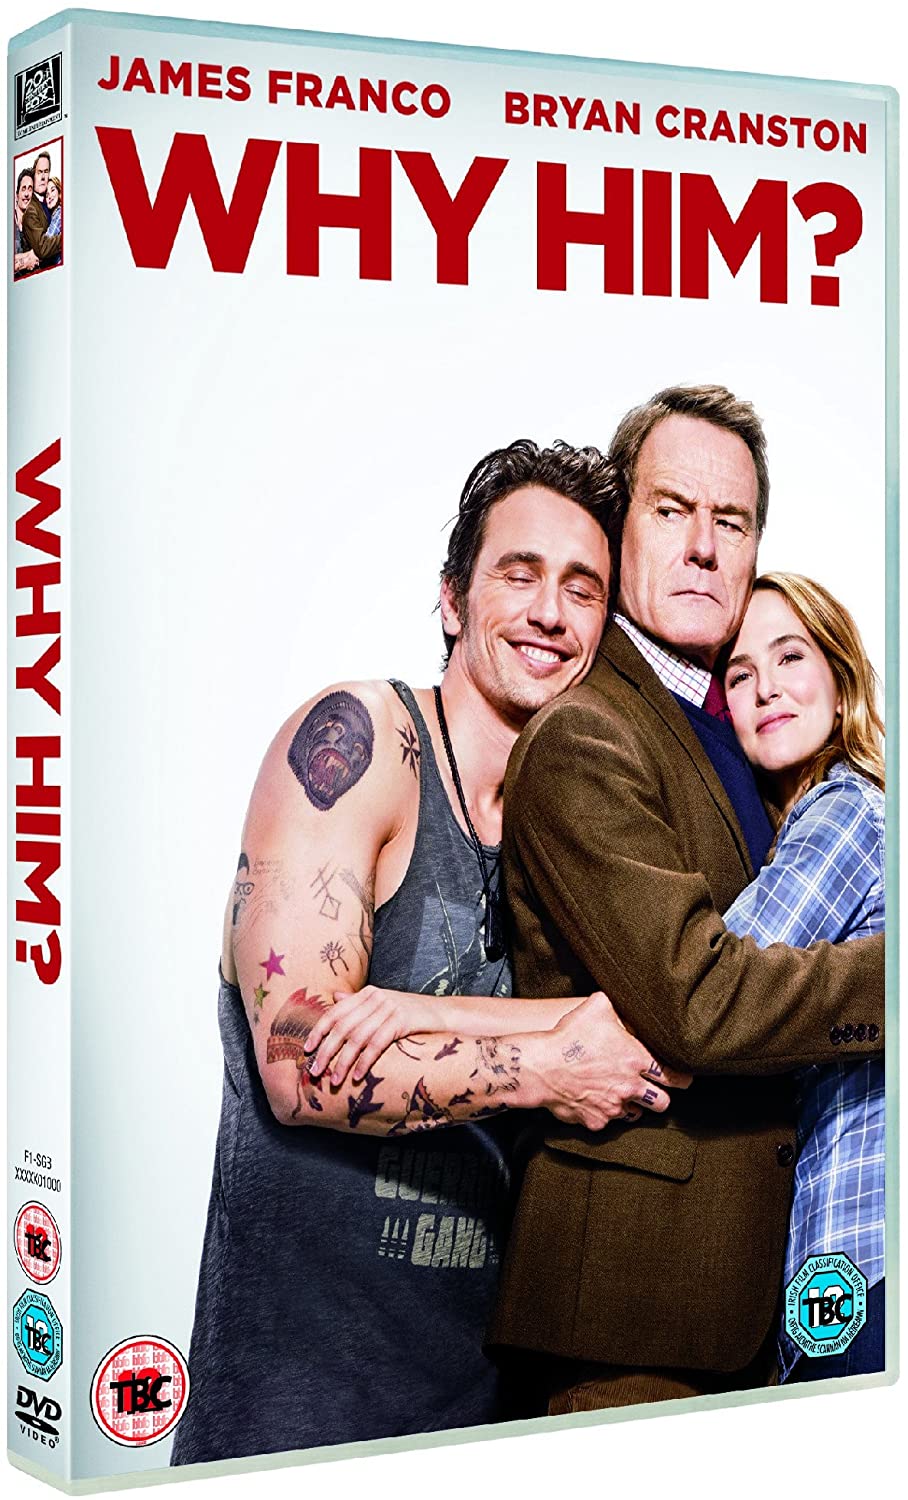 Why Him? - Comedy/Romance [DVD]